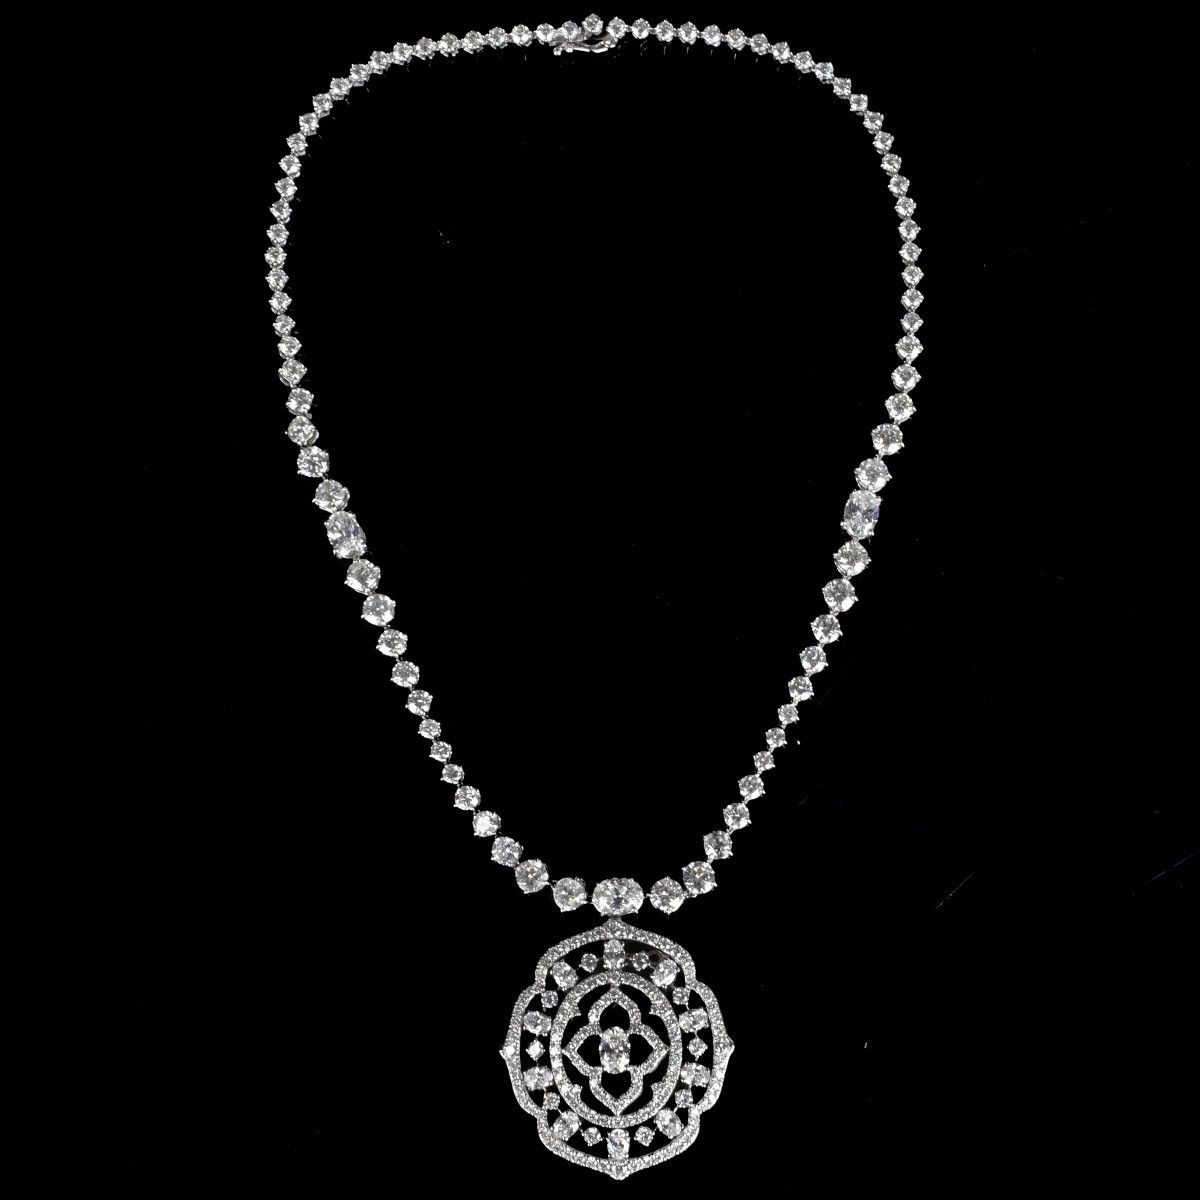 Piranesi Diamond and 18K Pendant Necklace